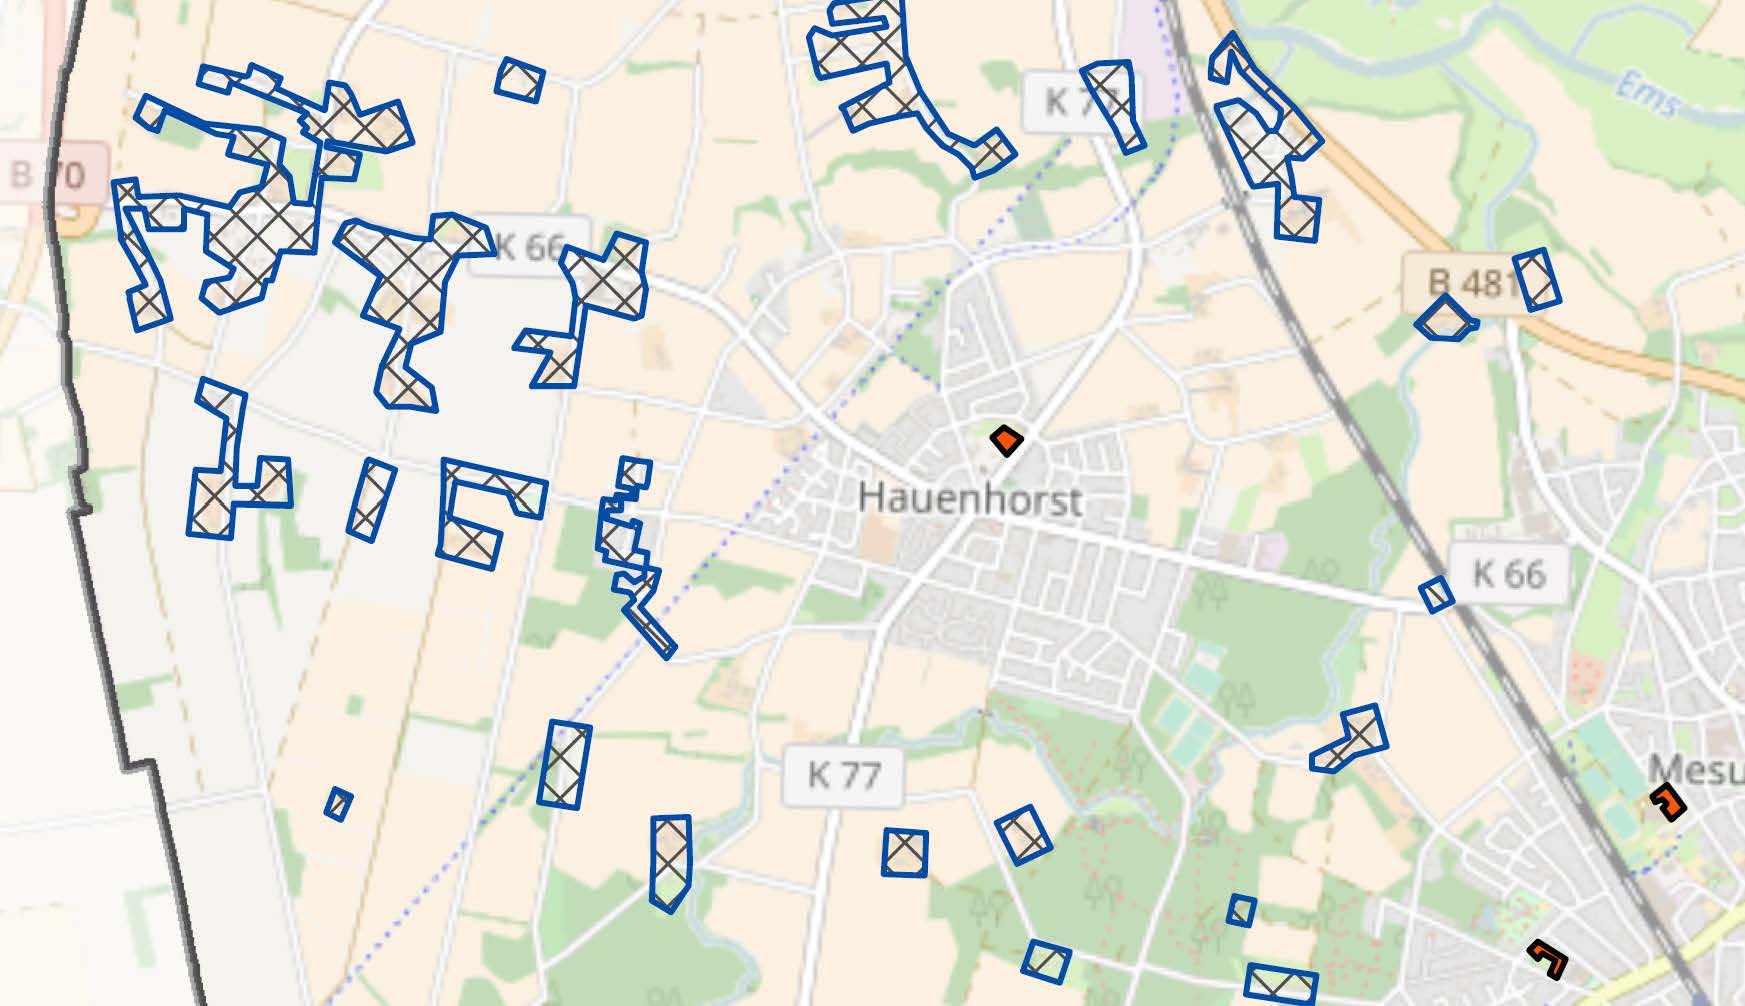 Karte der unterversorgten Gebiete in Hauenhorst und Catenhorn